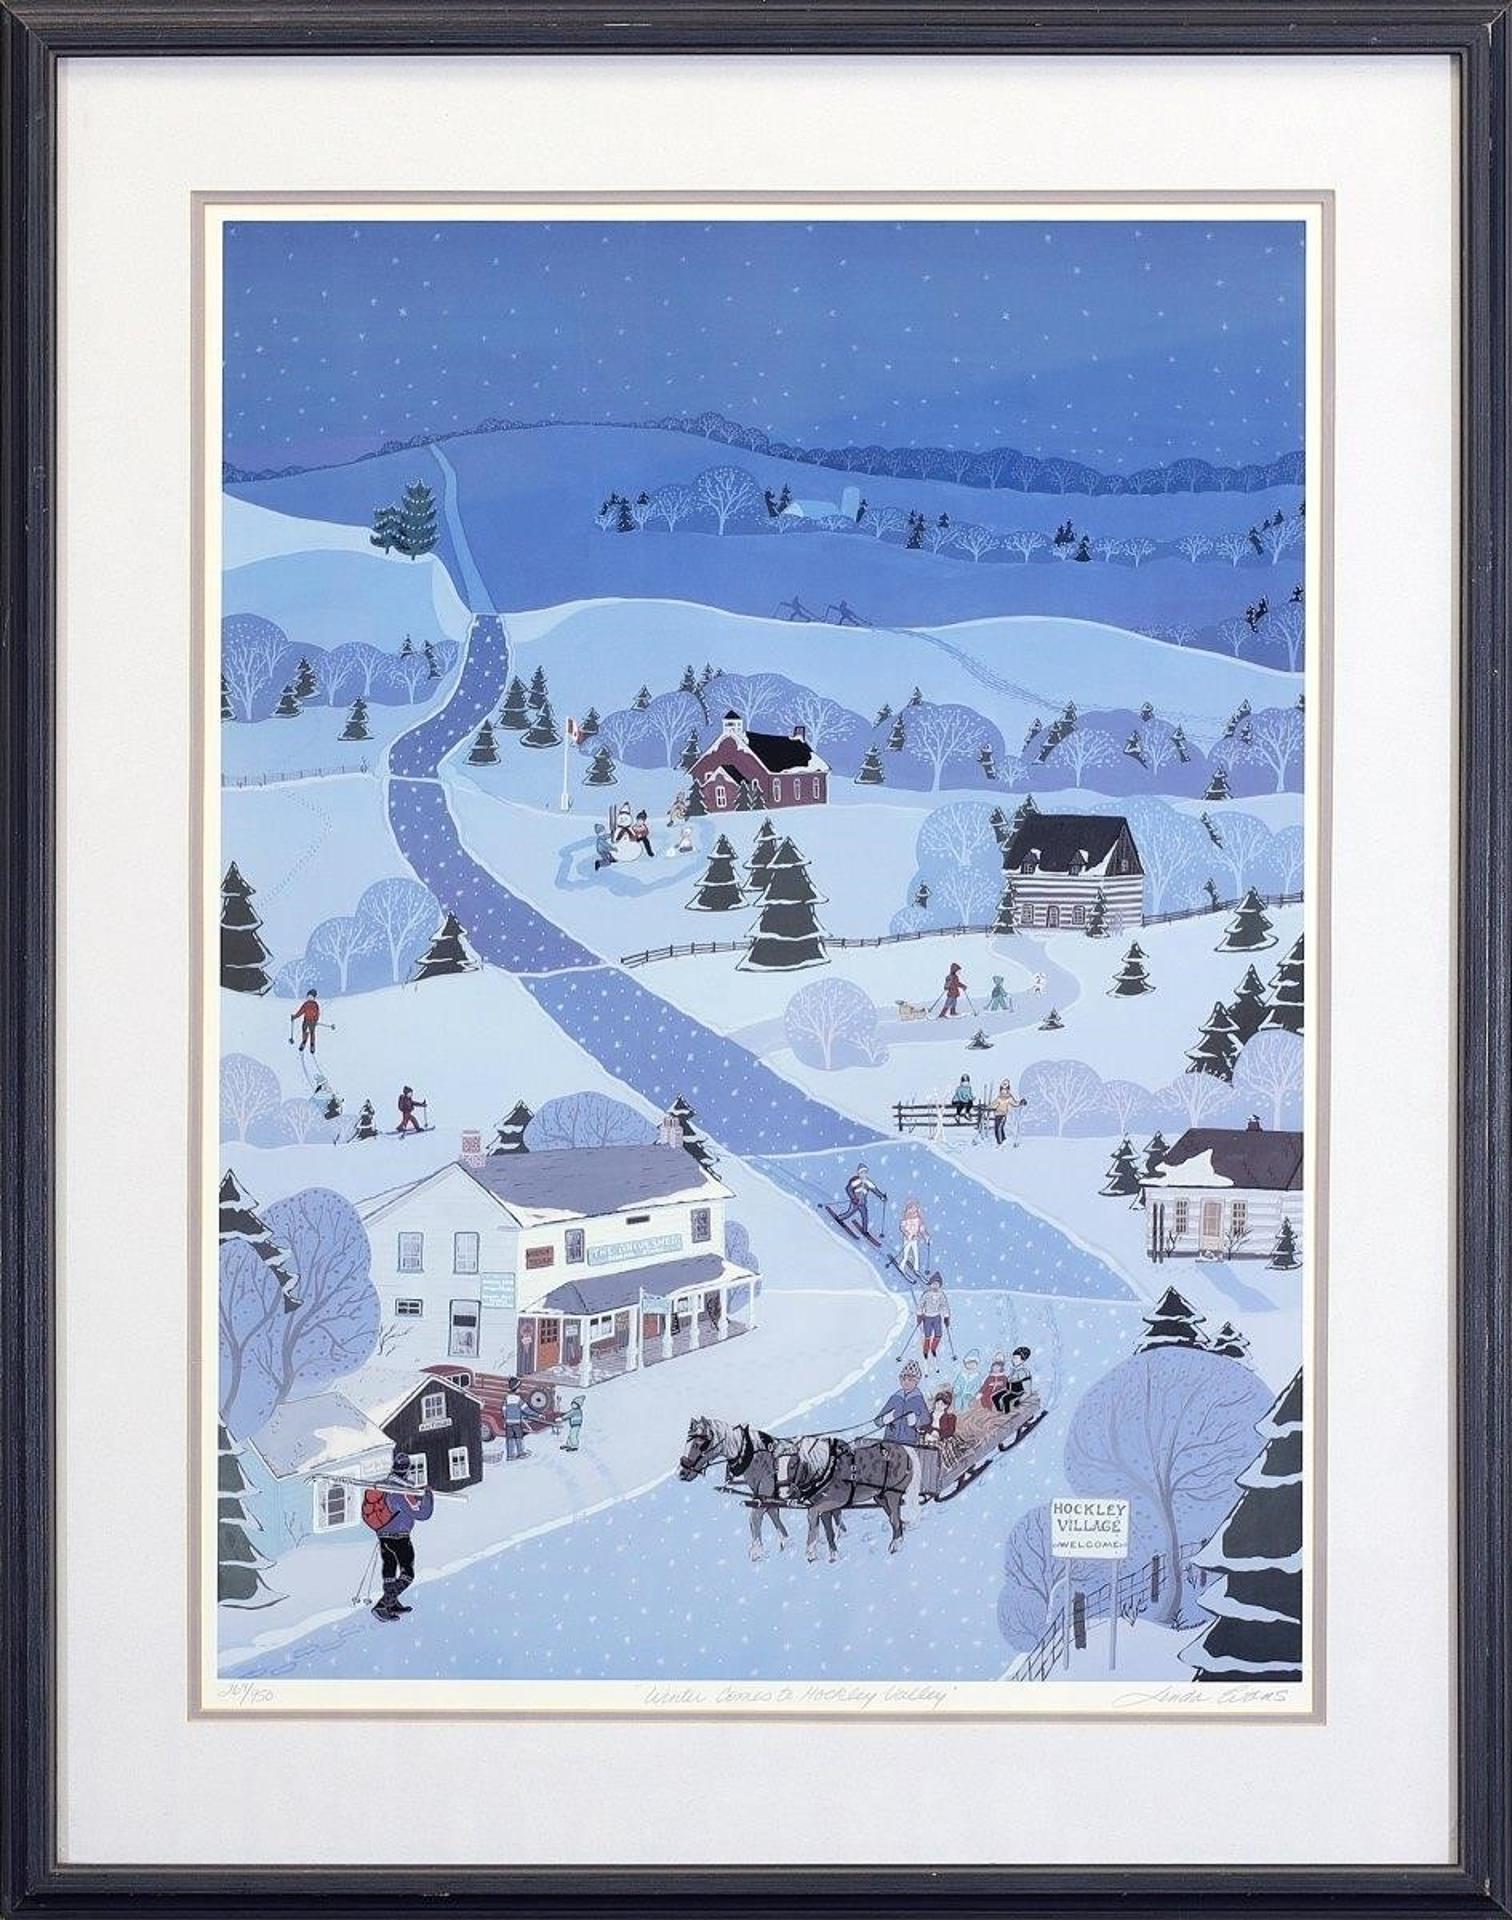 Linda Evans (1949) - “Winter Comes to Hockley Valley”; 1989; ed. #269/950